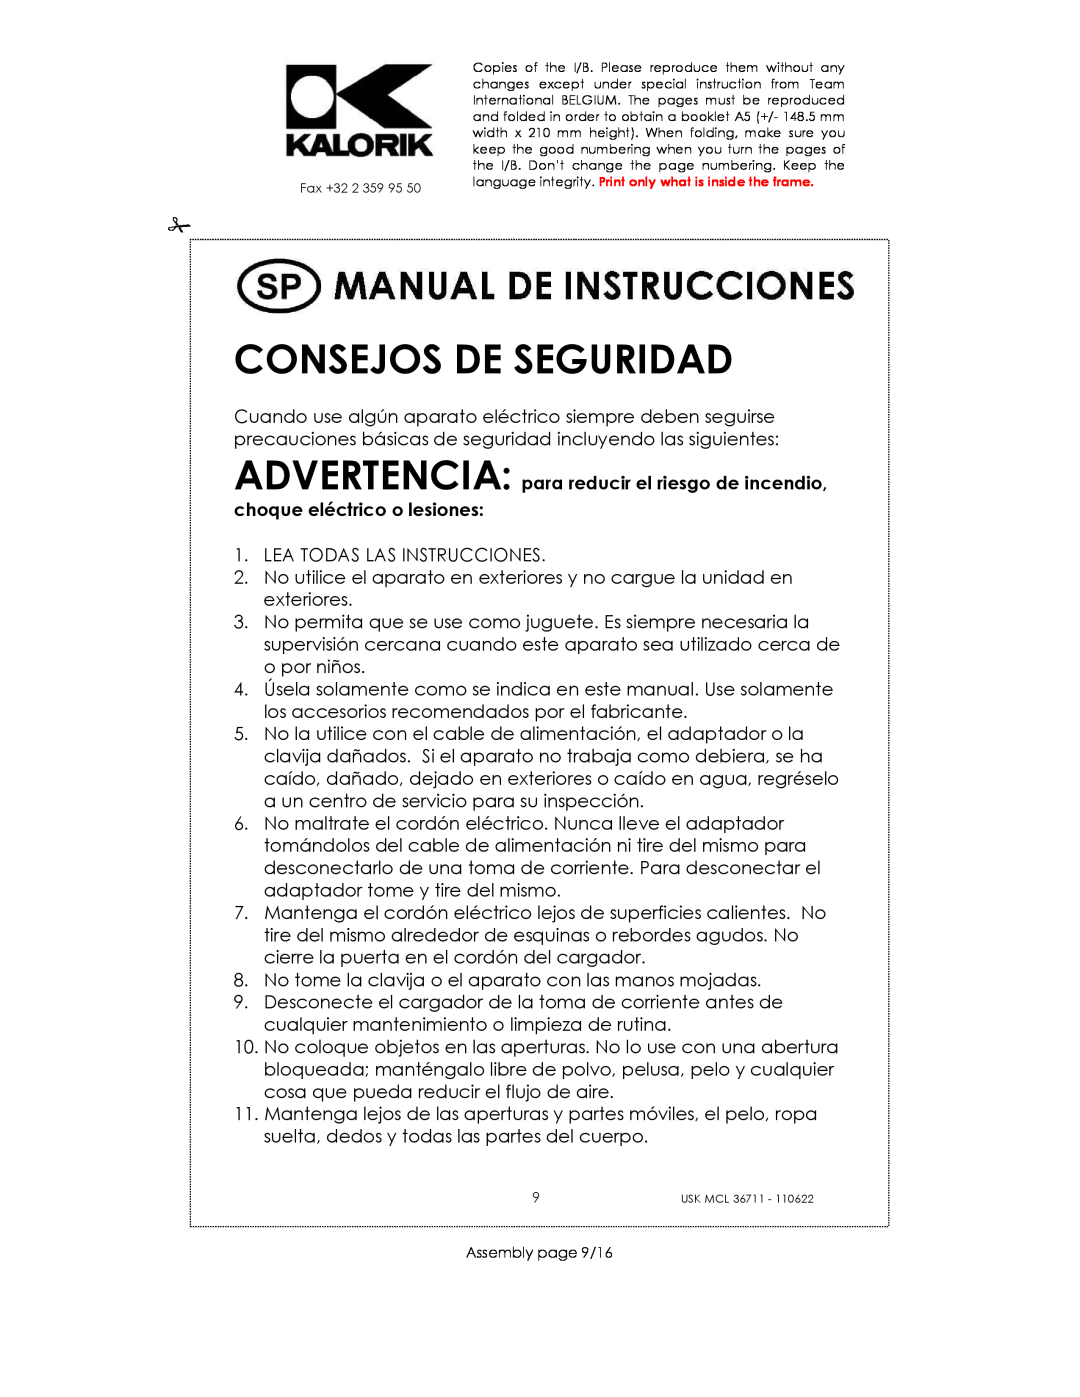 Kalorik USK MCL 36711 manual Consejos De Seguridad 